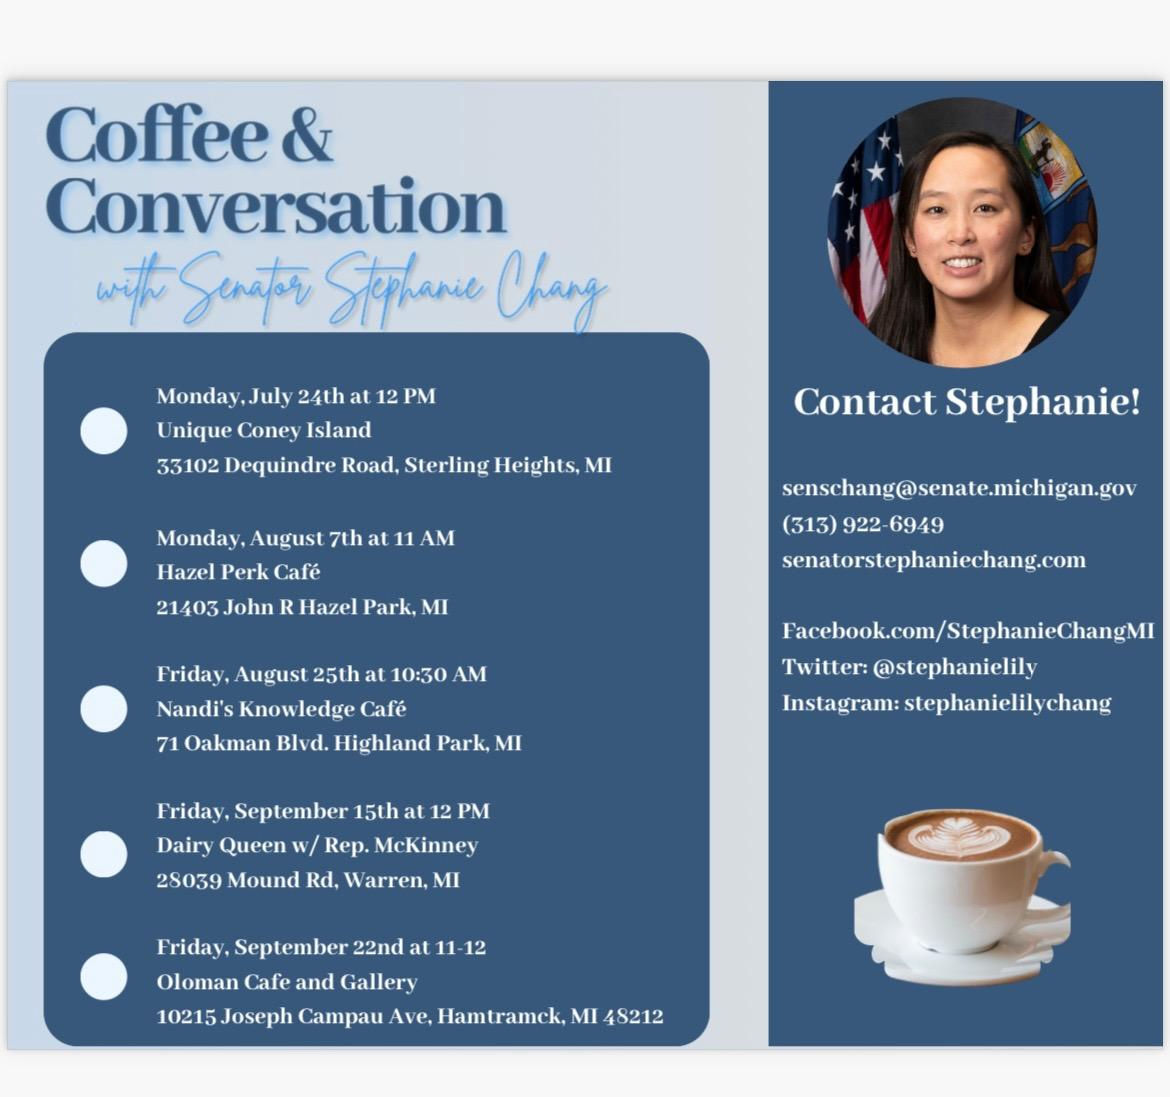 Coffee & Conversation with Senator Stephanie Chang